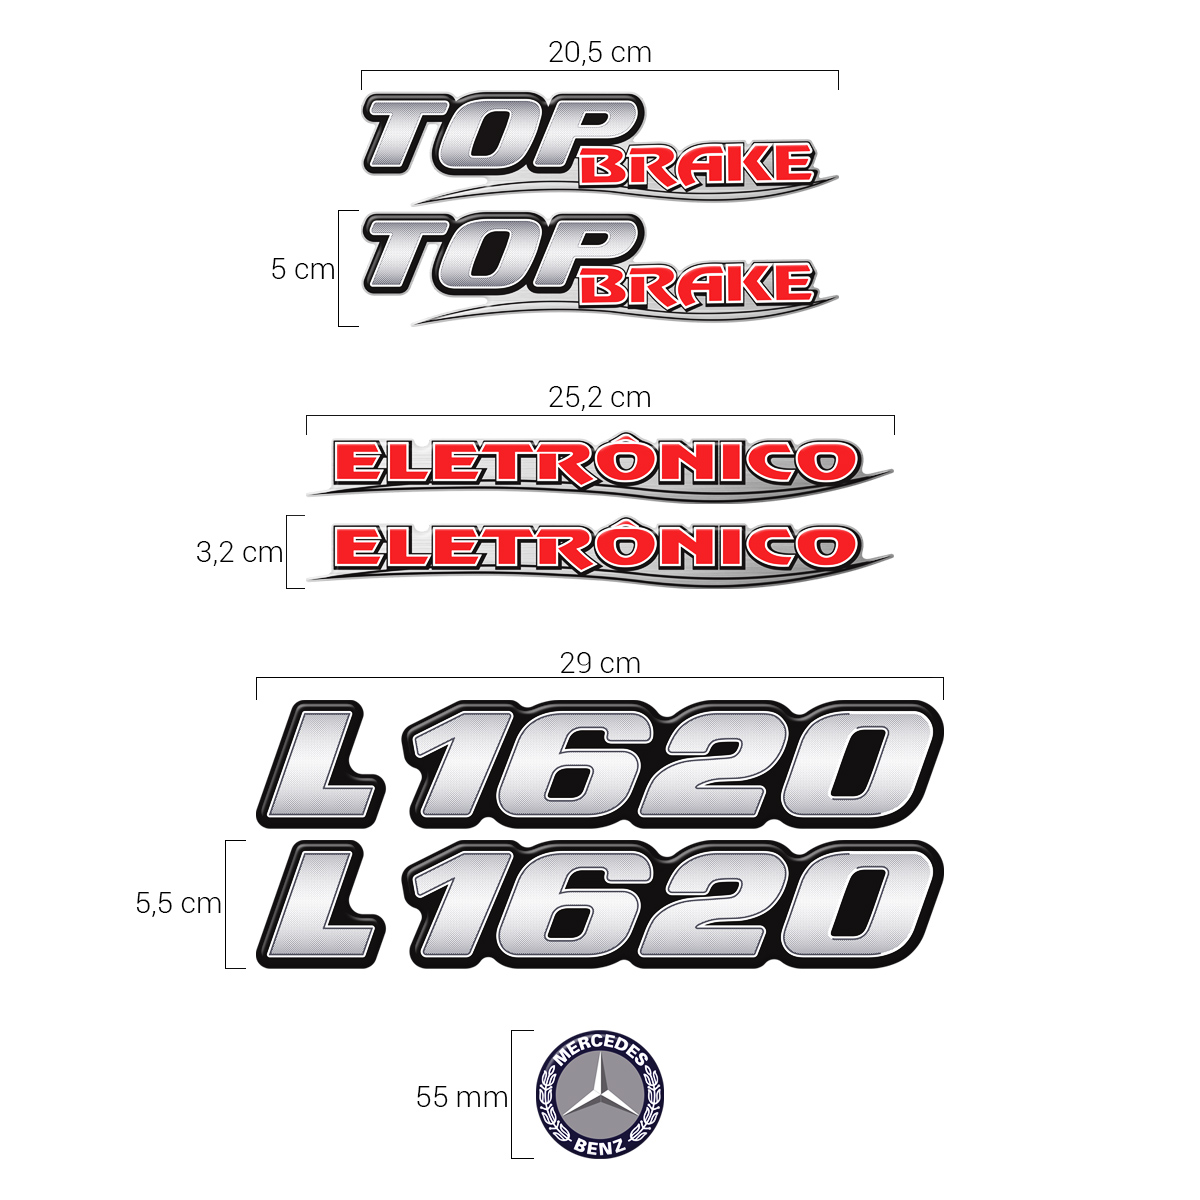 Kit Emblemas Mercedes Eletrônico L 1620 Eletrônico Top Brake